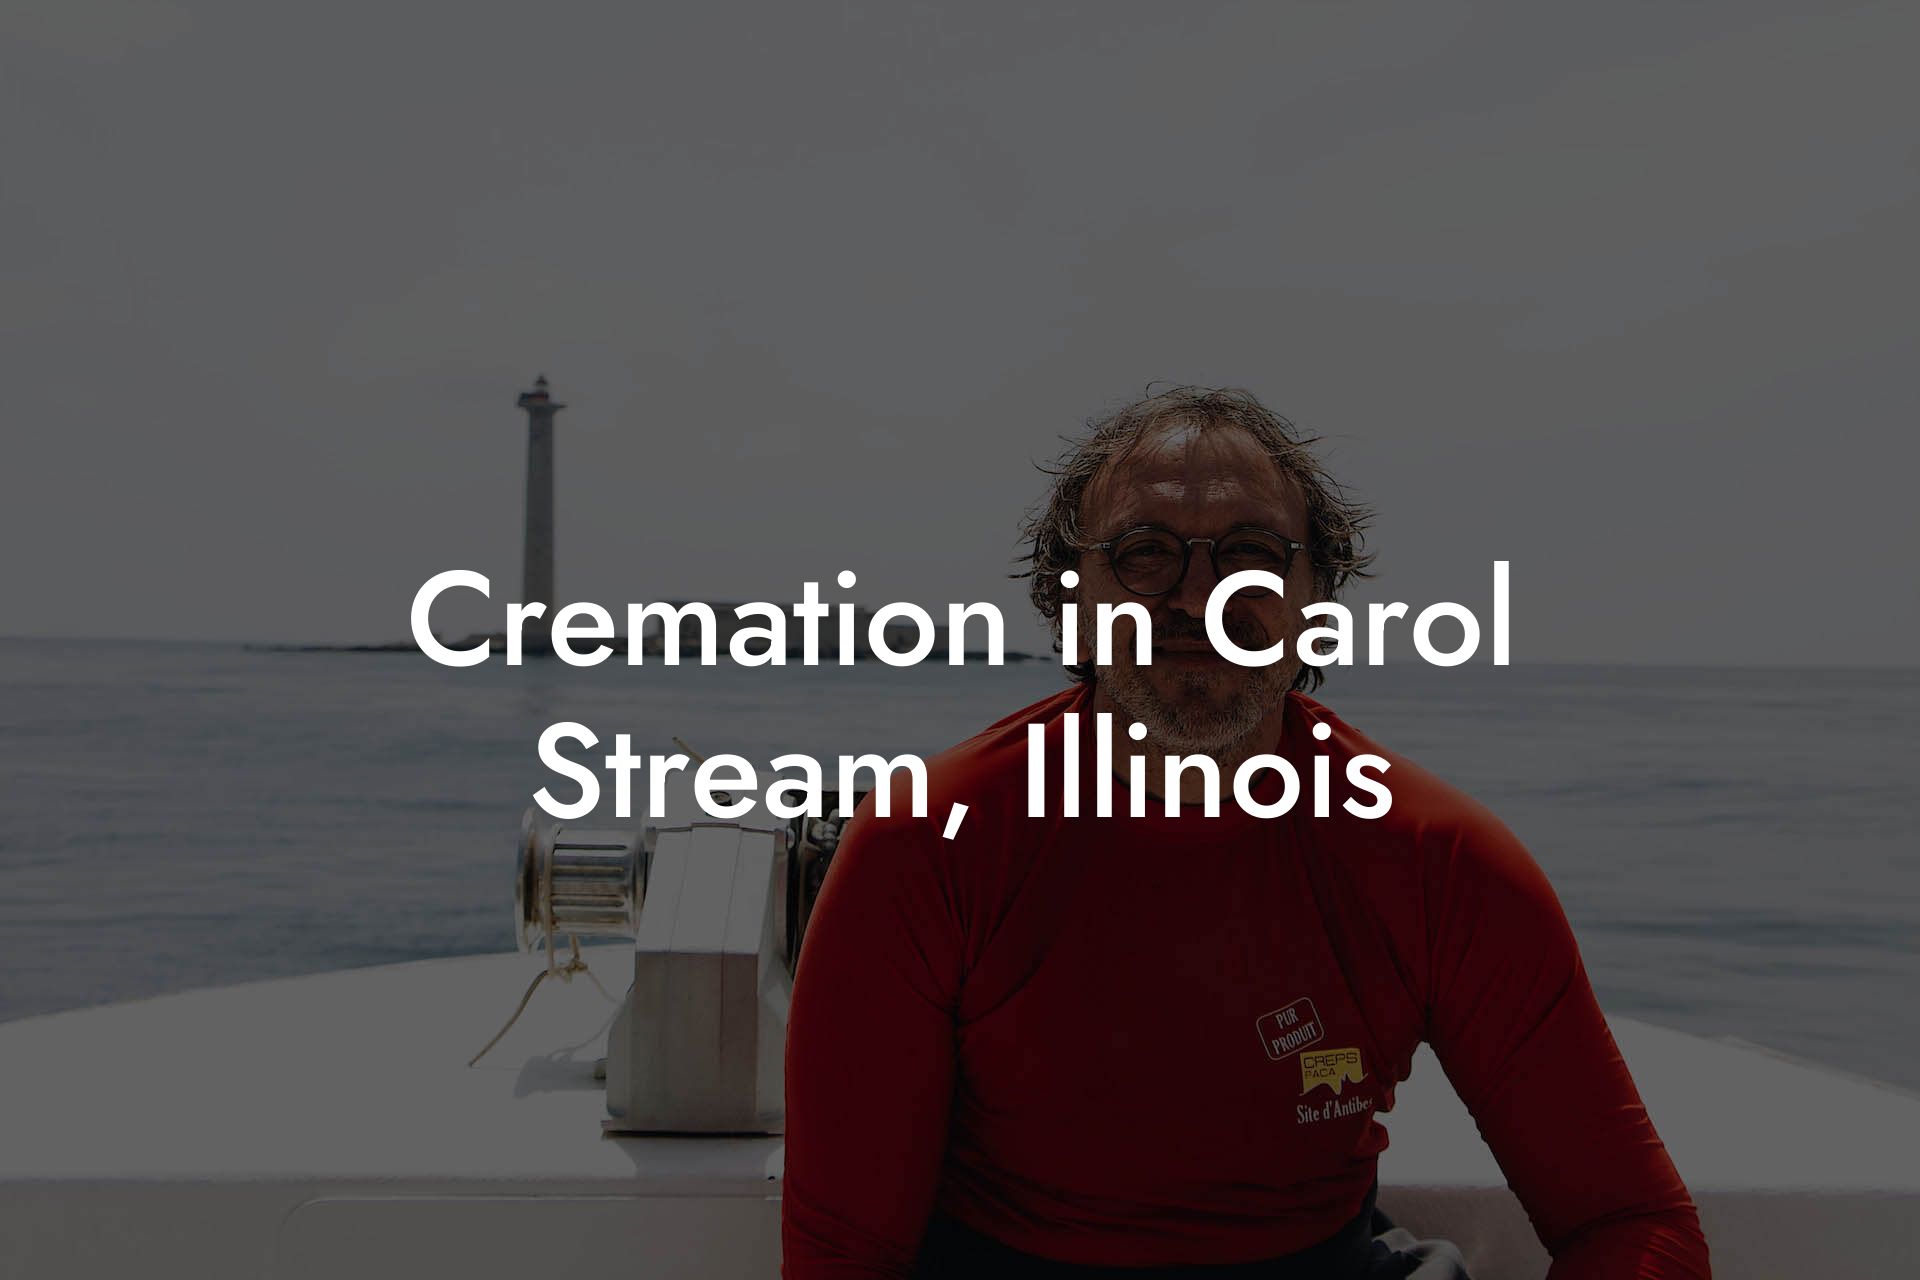 Cremation in Carol Stream, Illinois